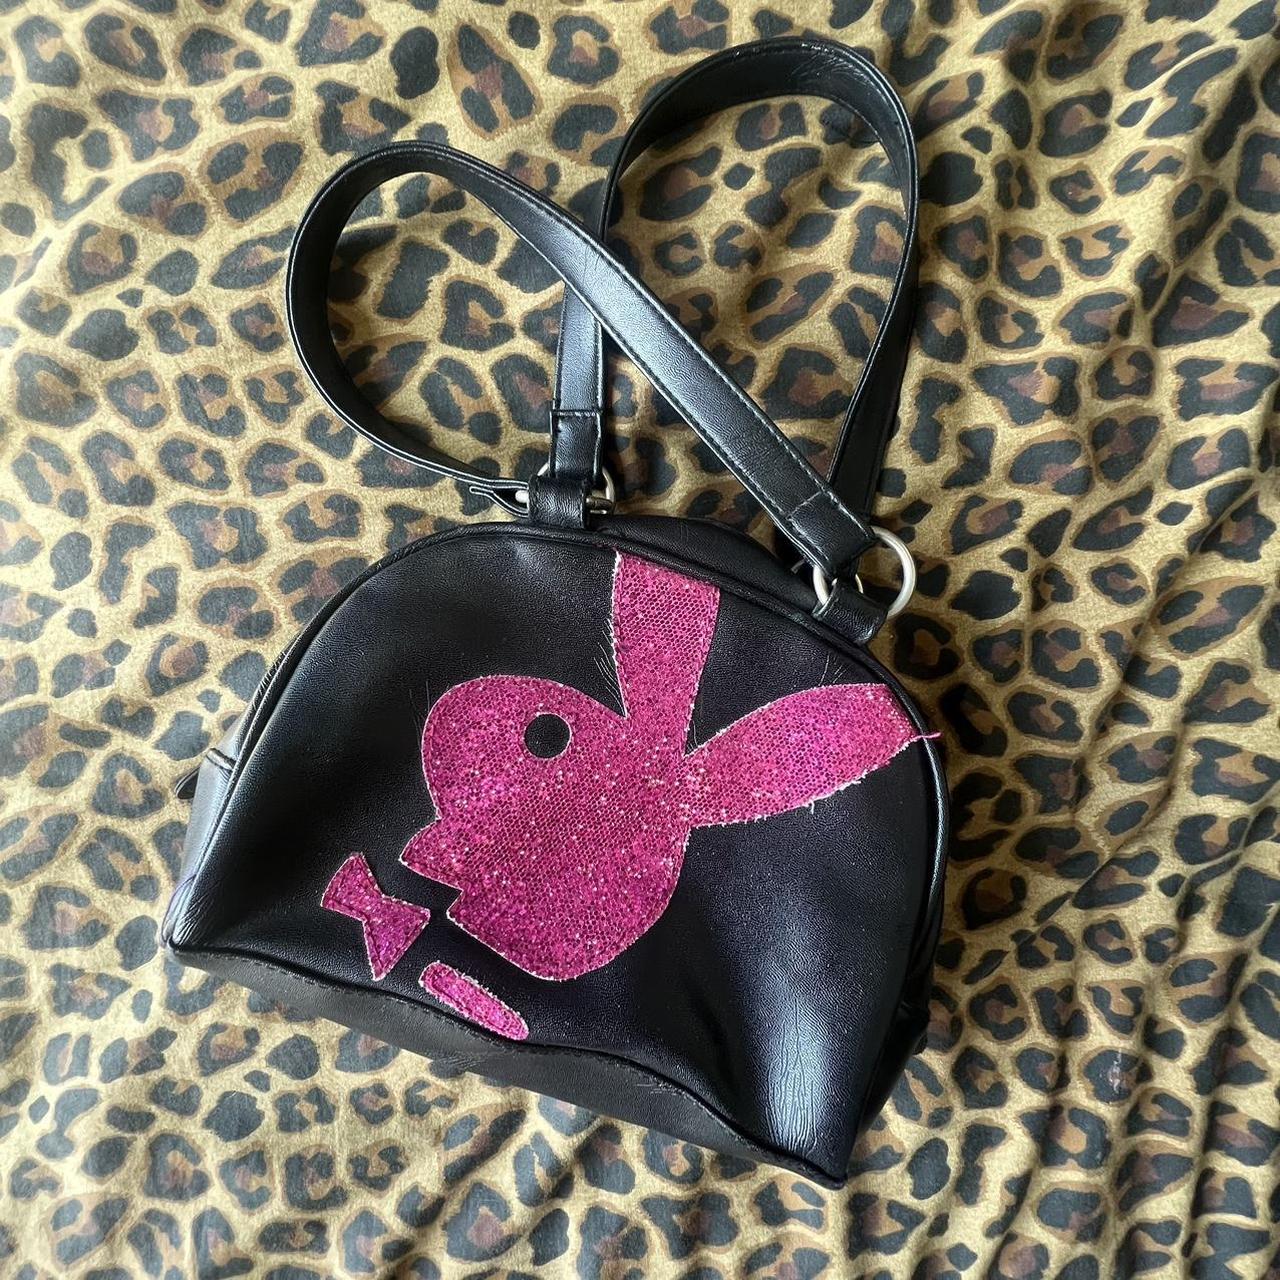 Playboy Leather Shoulder Handbags